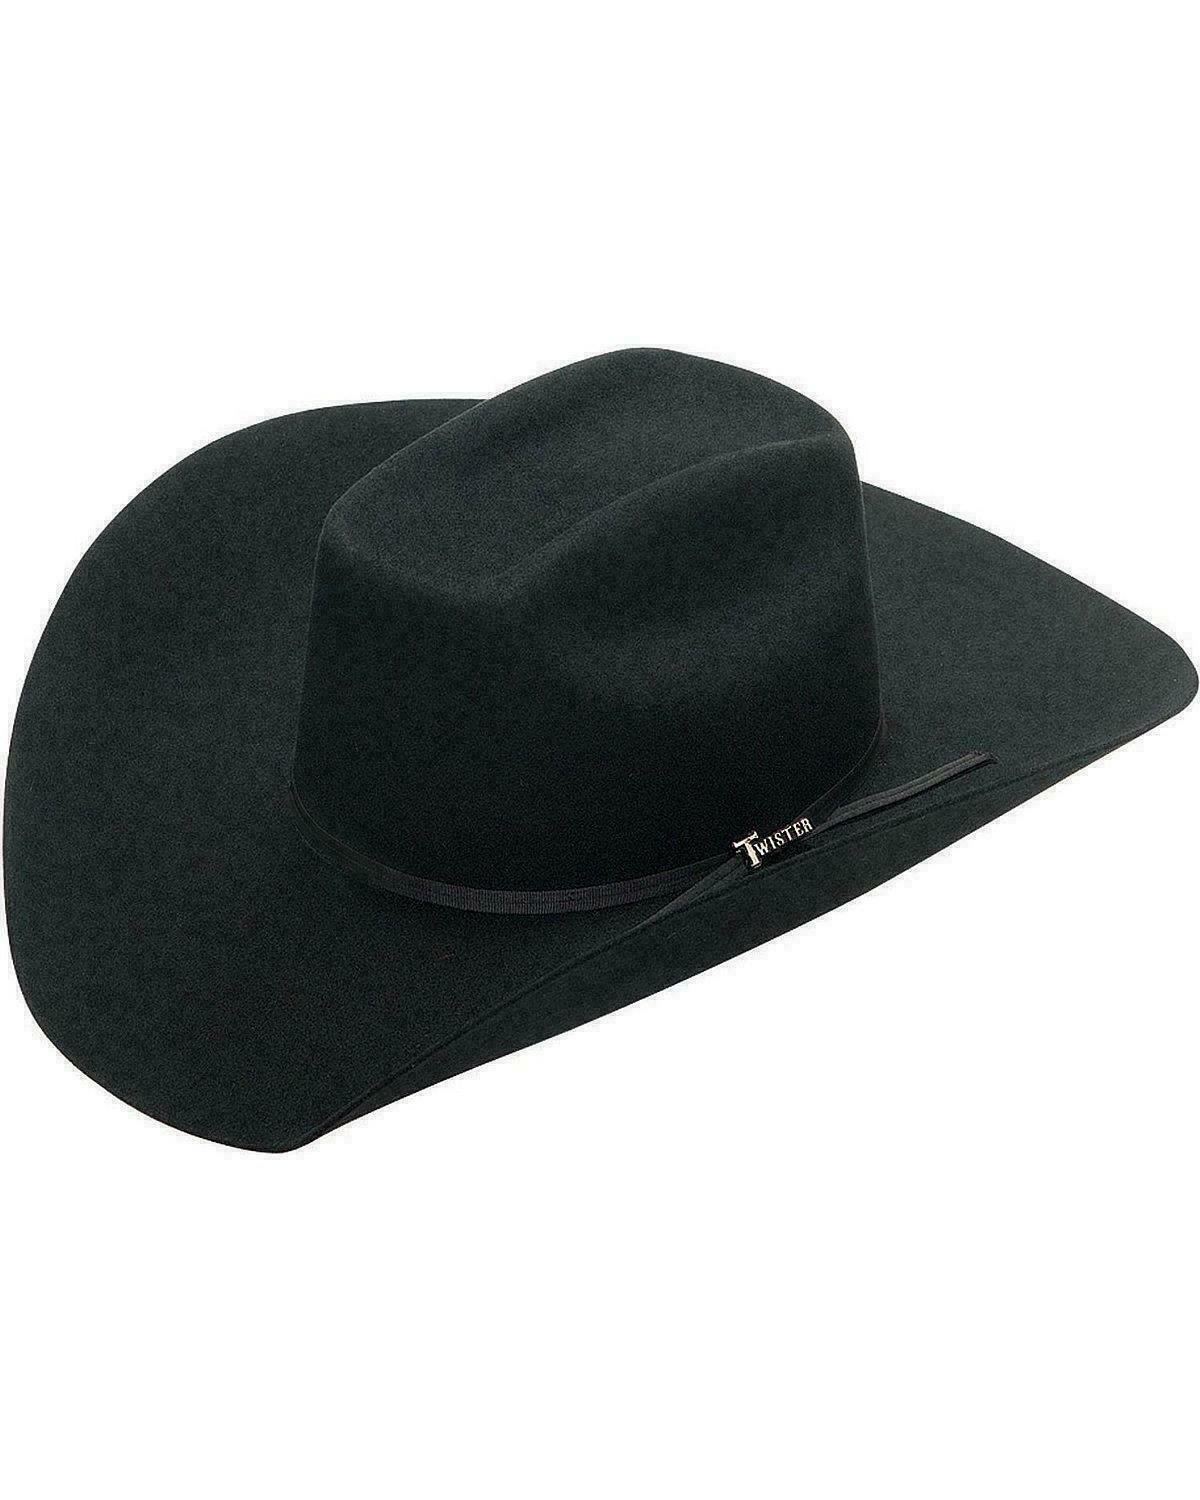 Twister 3X Select Black Wool Midland Cowboy Hat